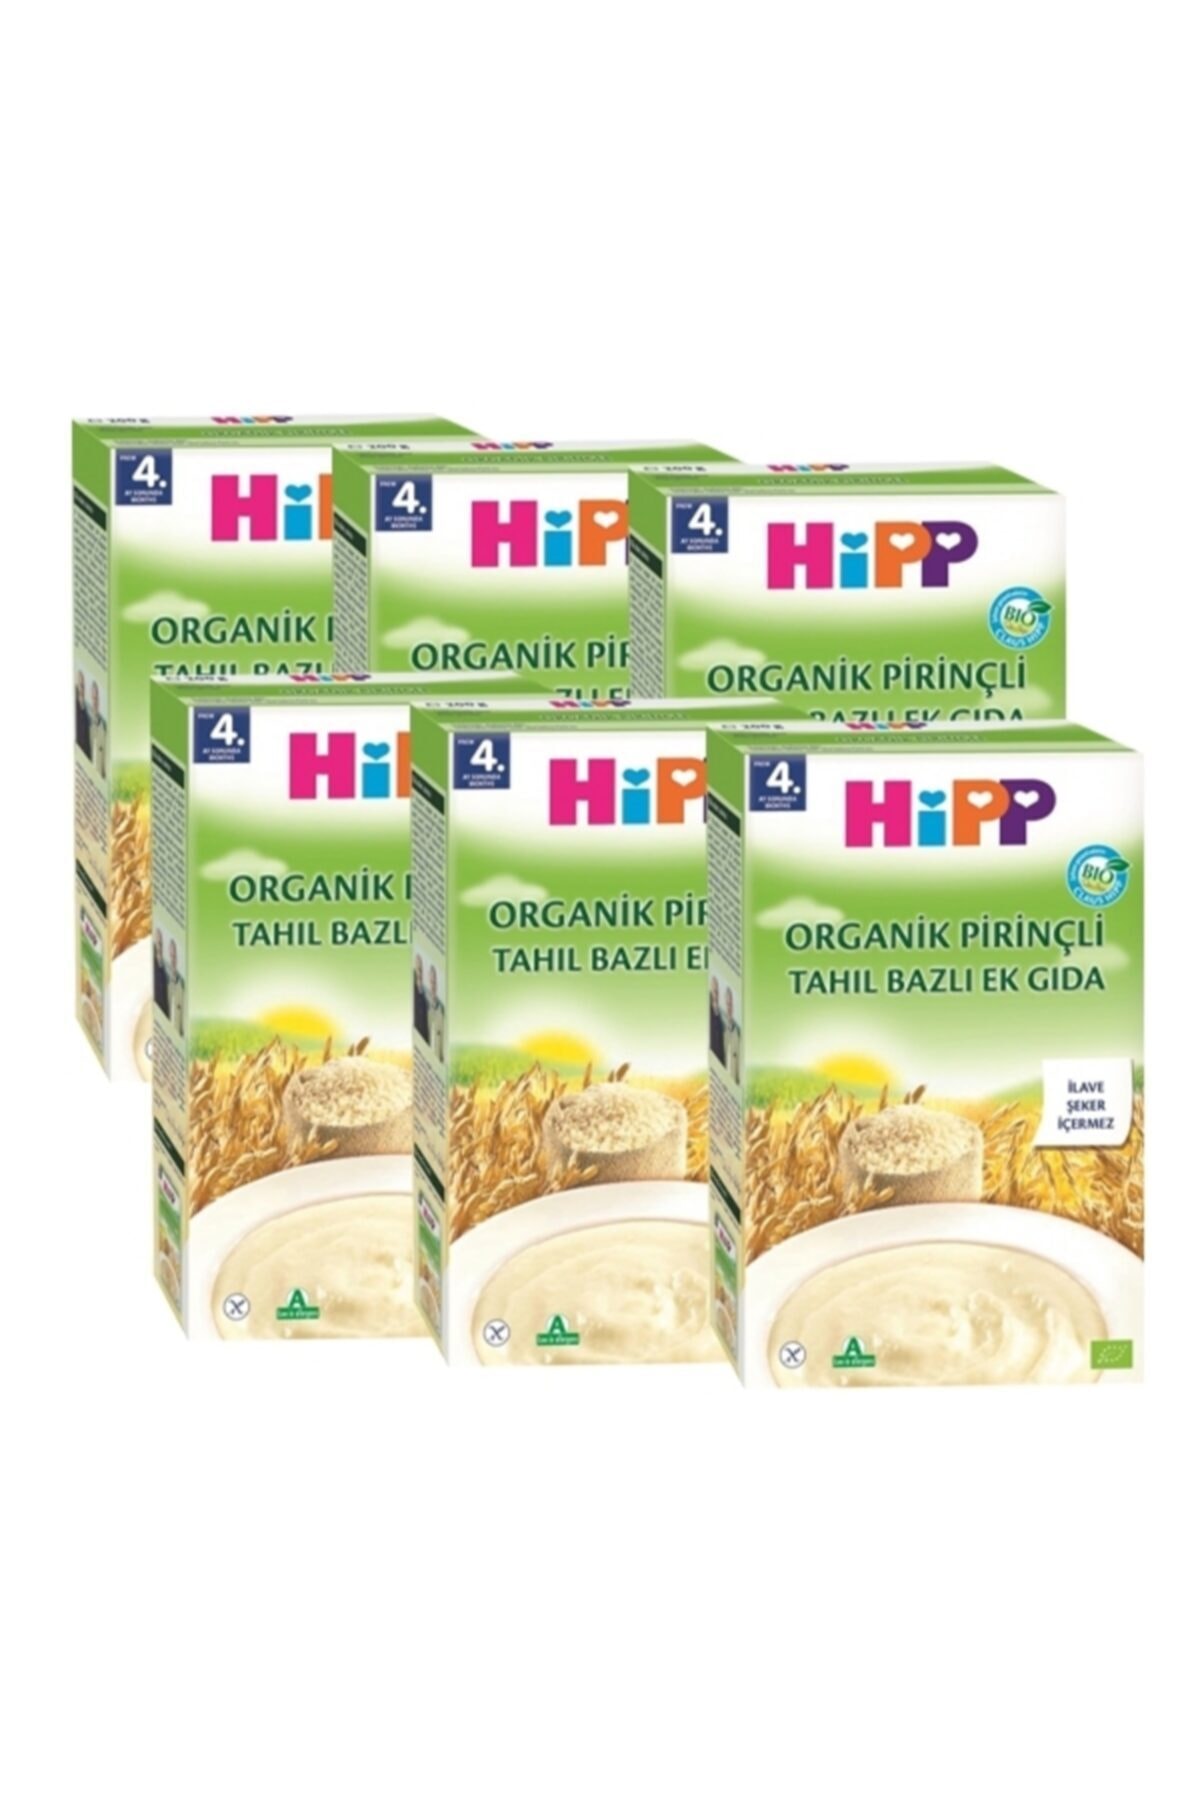 Hipp Organik Pirinçli Ek Gıda Kaşık Maması 200 Gr X 6 Adet